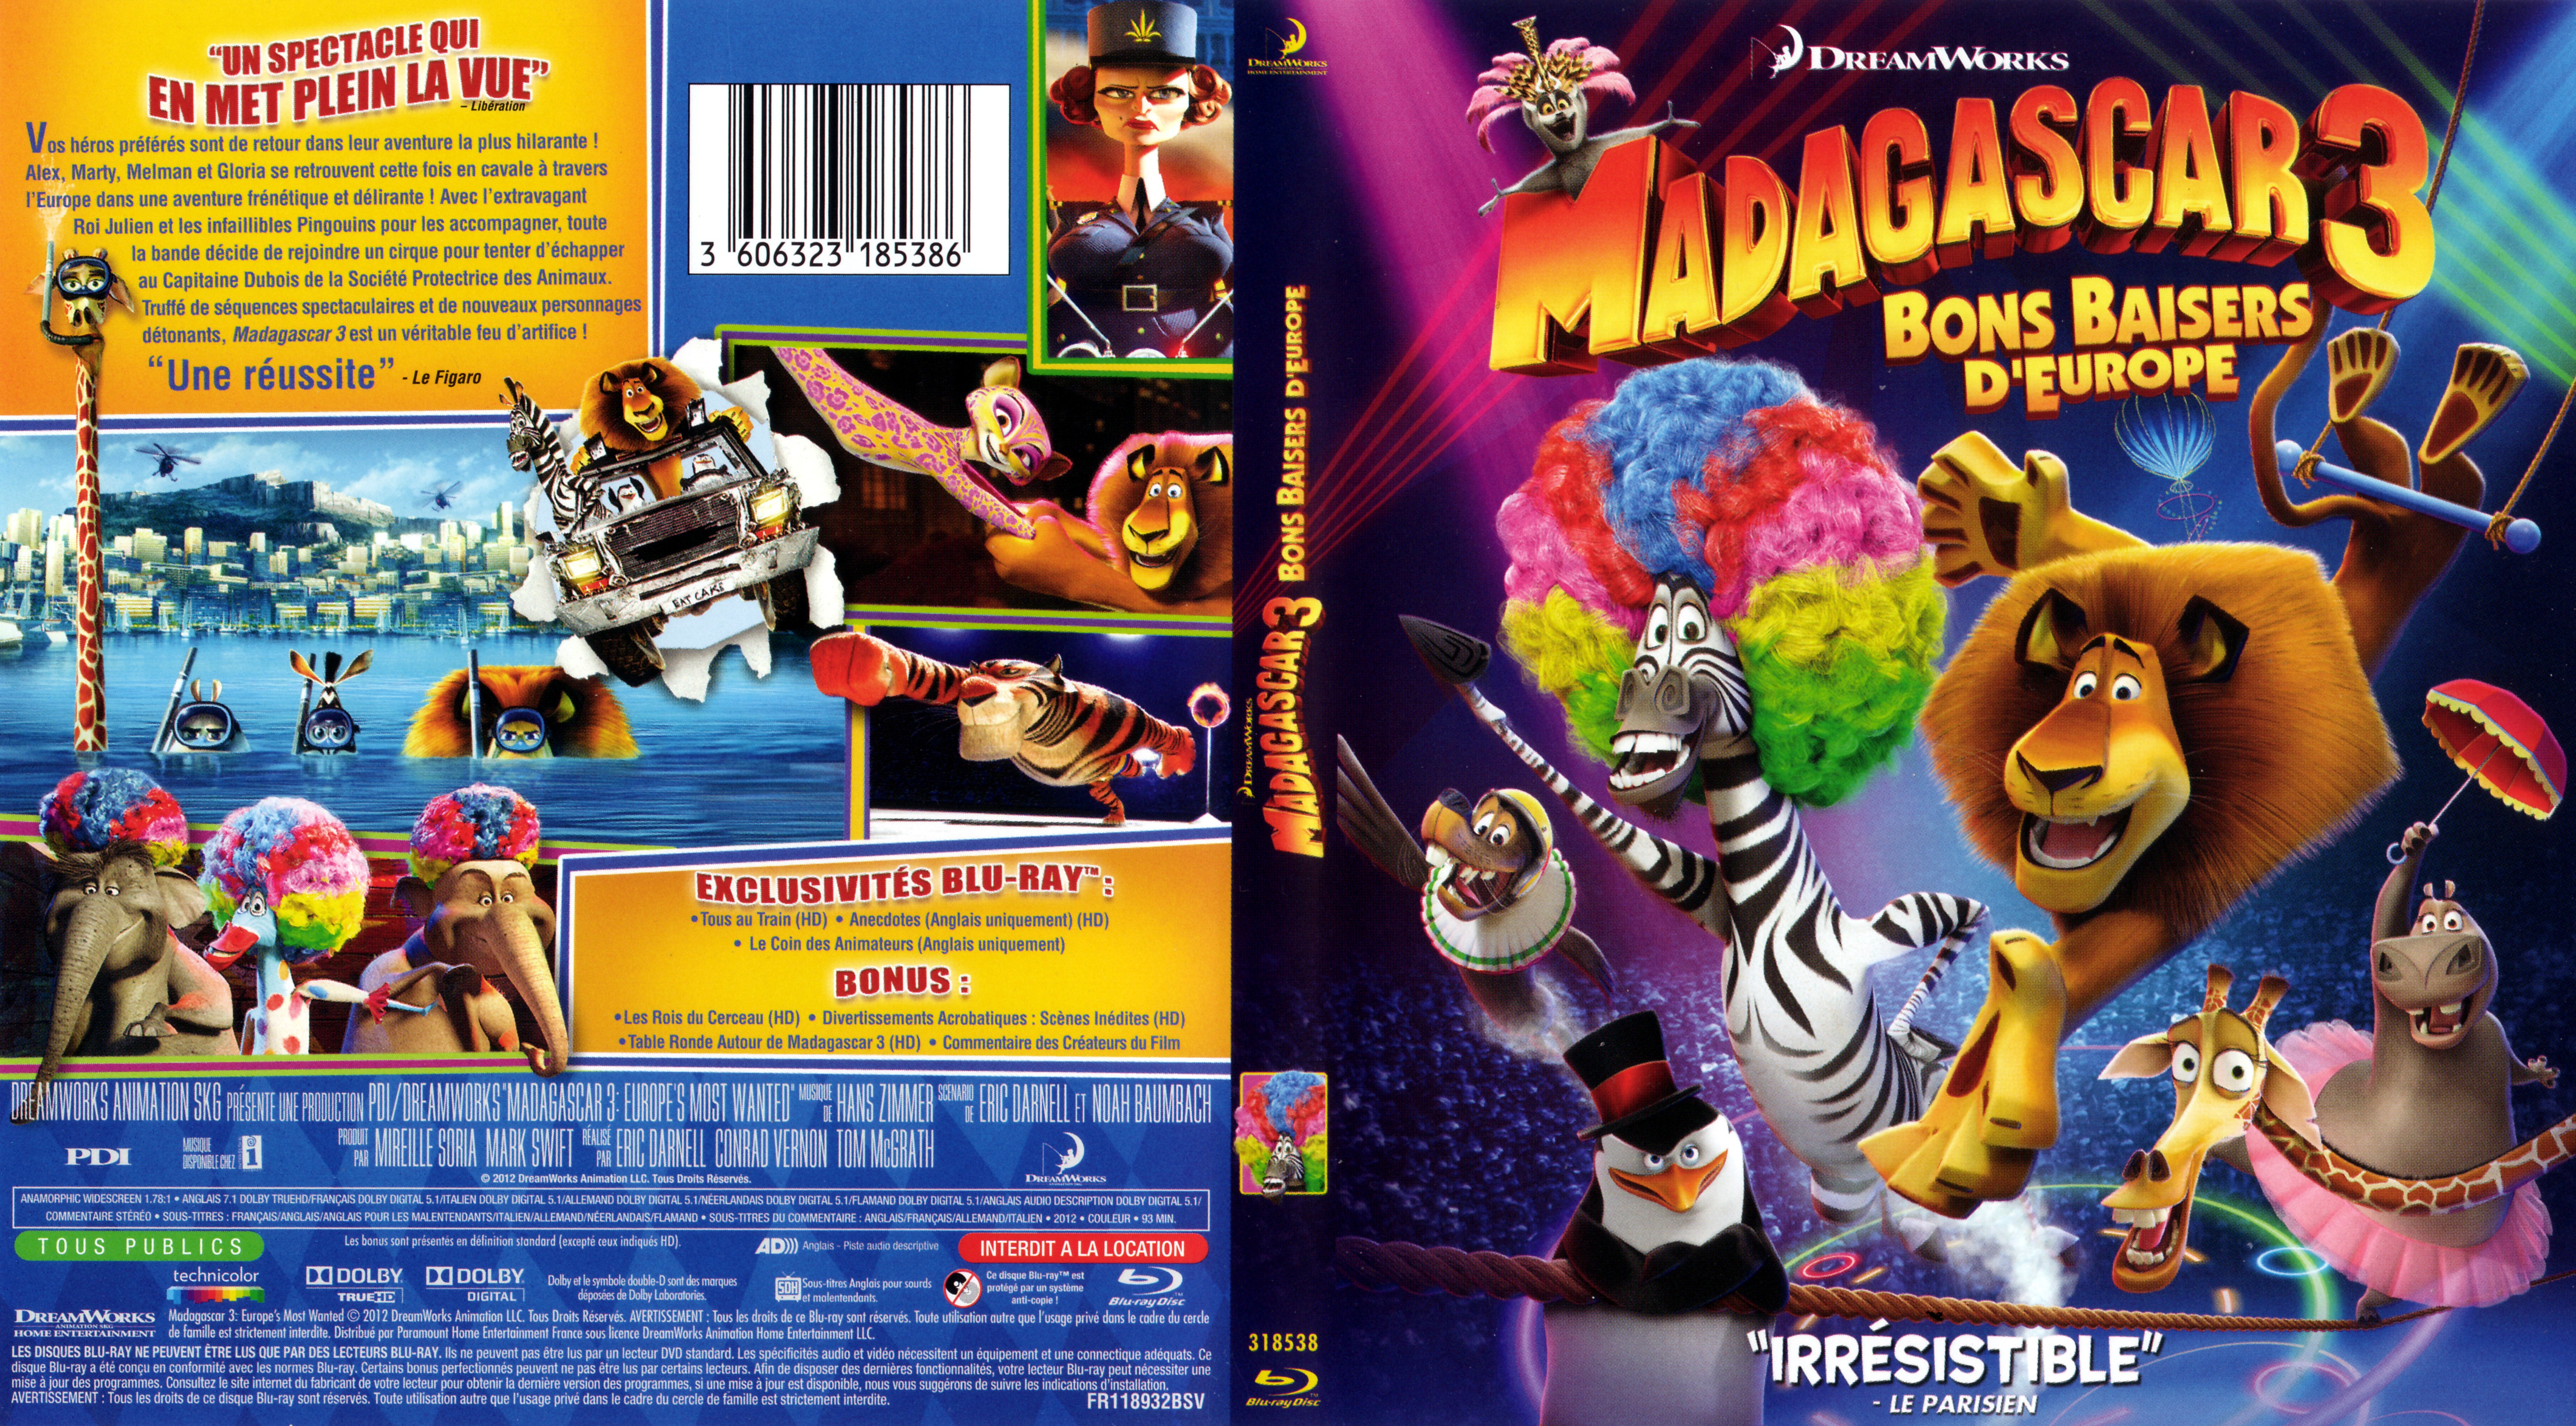 Jaquette DVD Madagascar 3 (BLU-RAY) v2